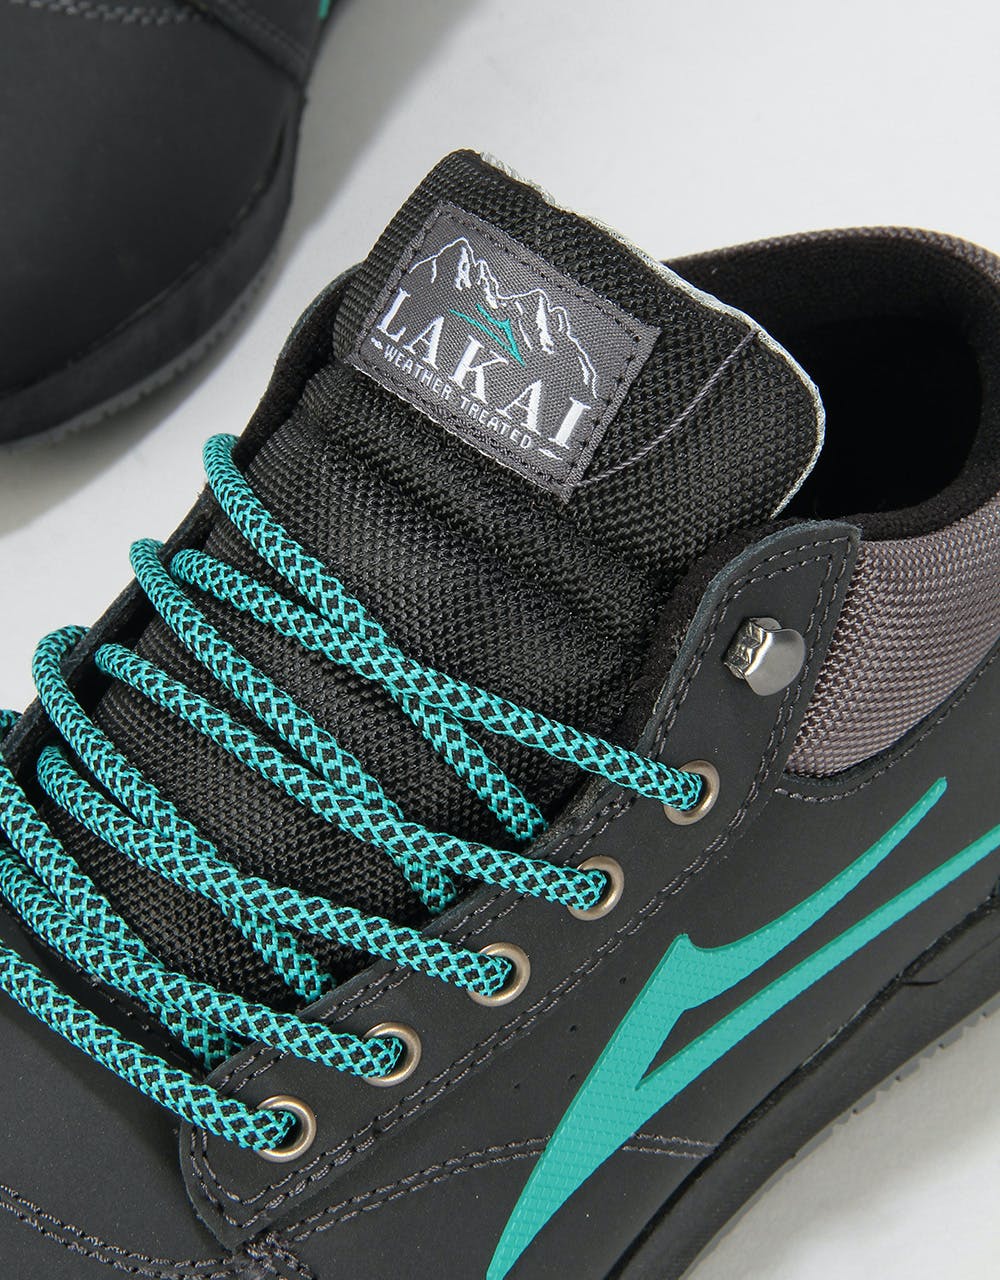 Lakai Griffin Mid WT Skate Shoes - Charcoal Nubuck